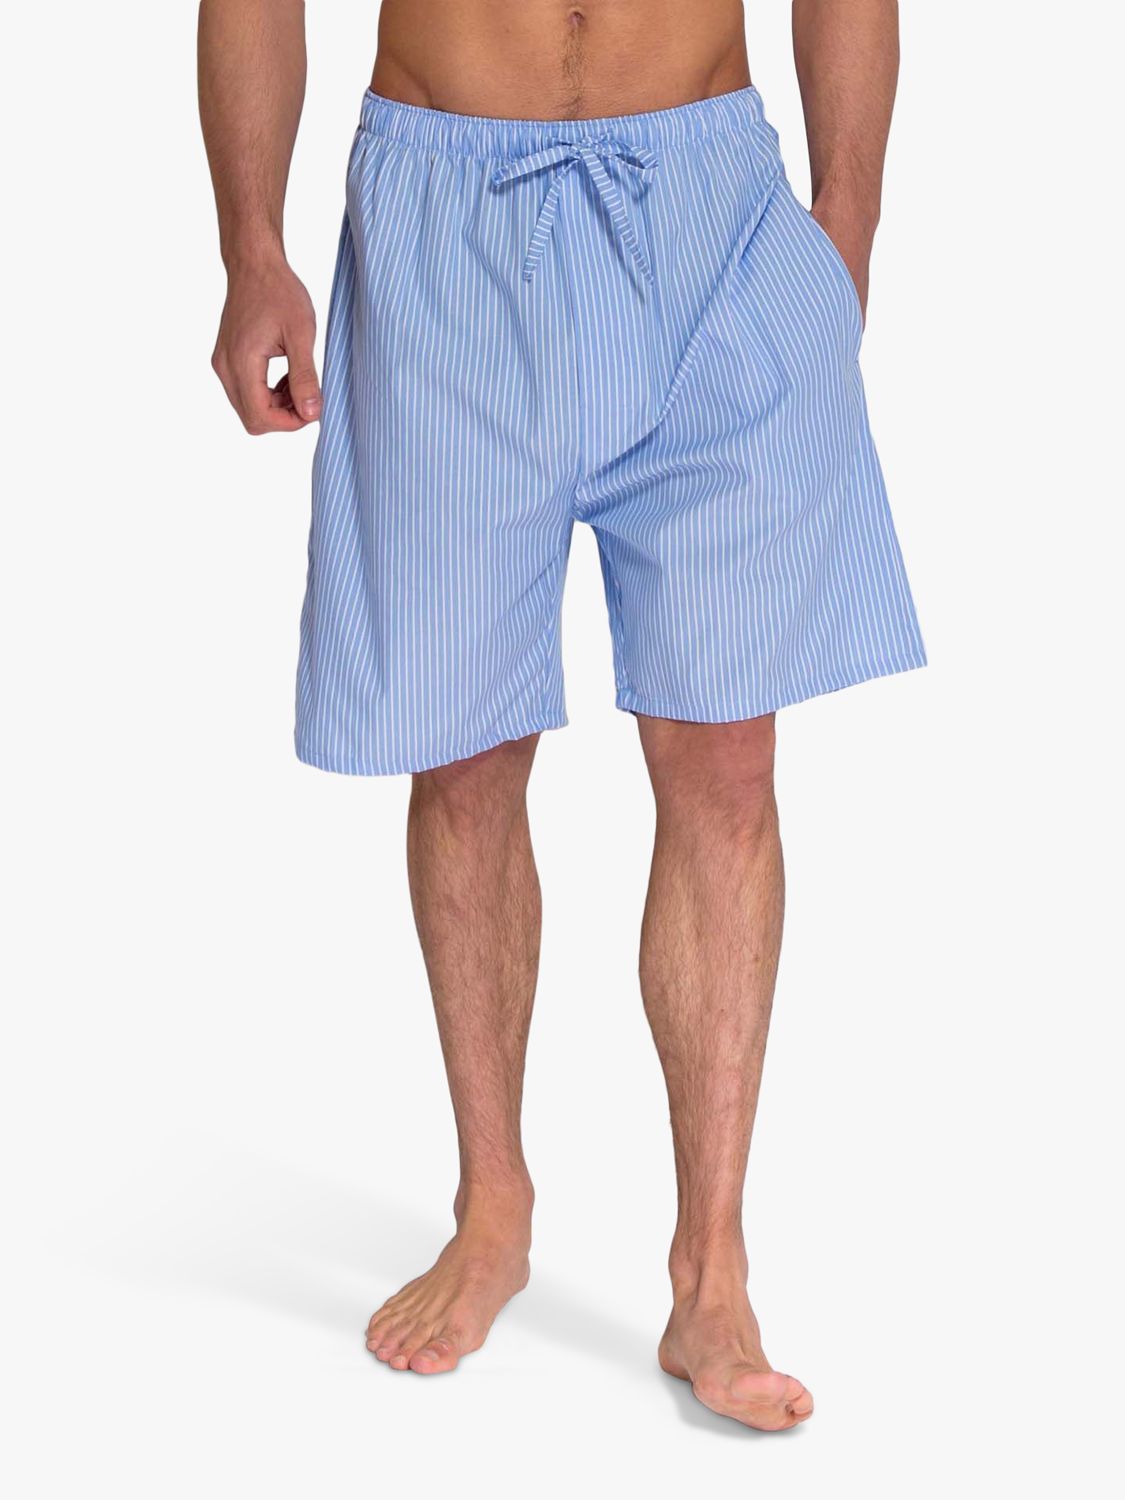 British Boxers Stripe Crisp Cotton Sleep Shorts, Light Blue Stripe, S